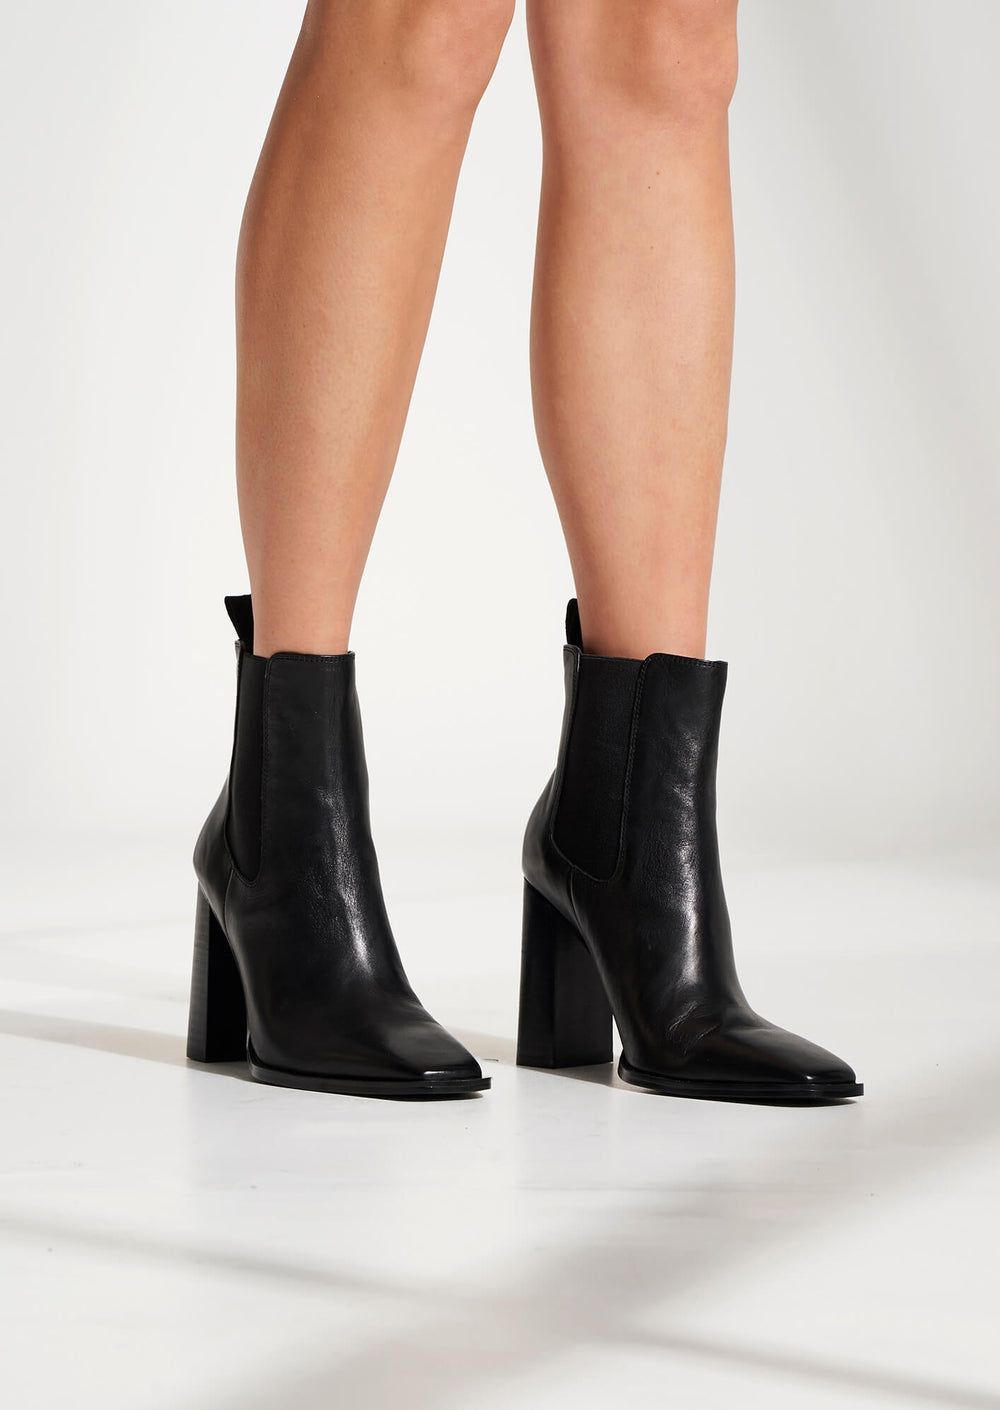 Ilyssa Black Como Ankle Boots | Boots 